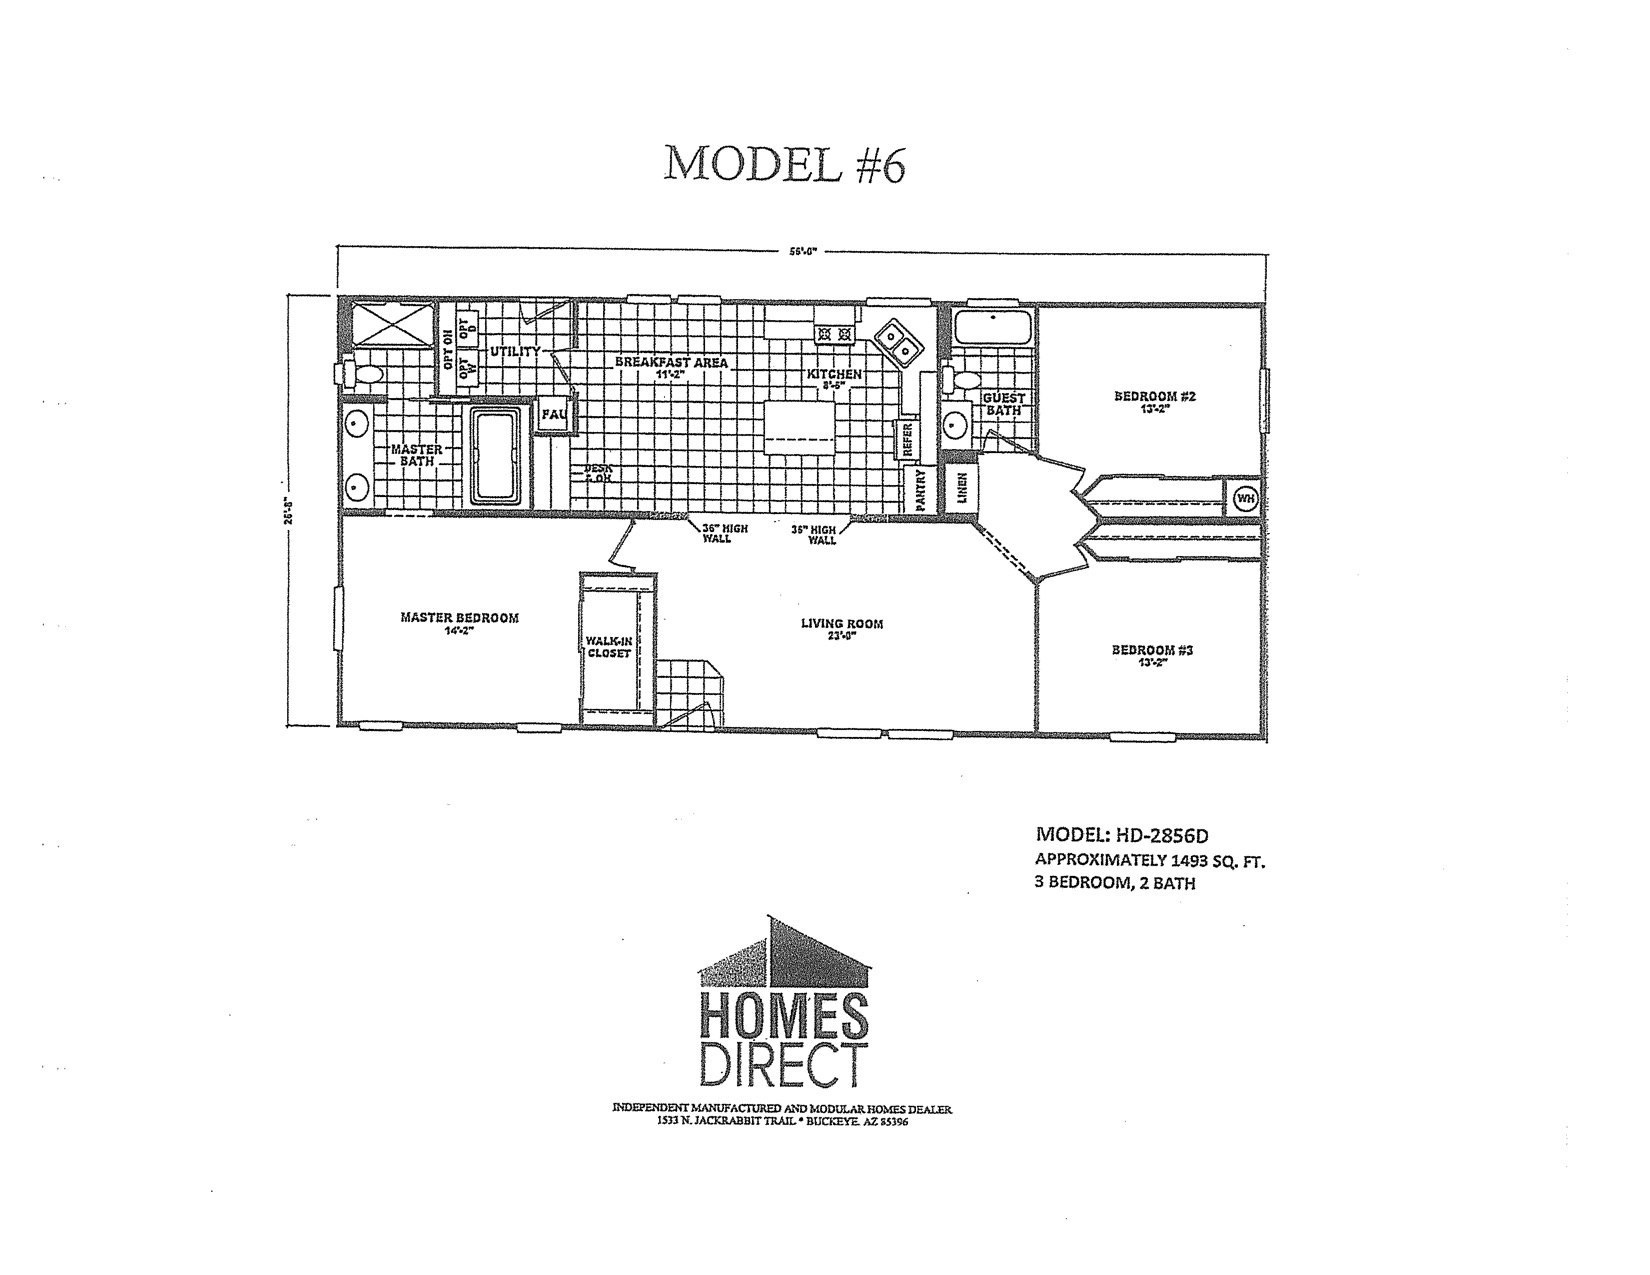 Homes Direct Modular Homes - Model HD2856D - Floorplan